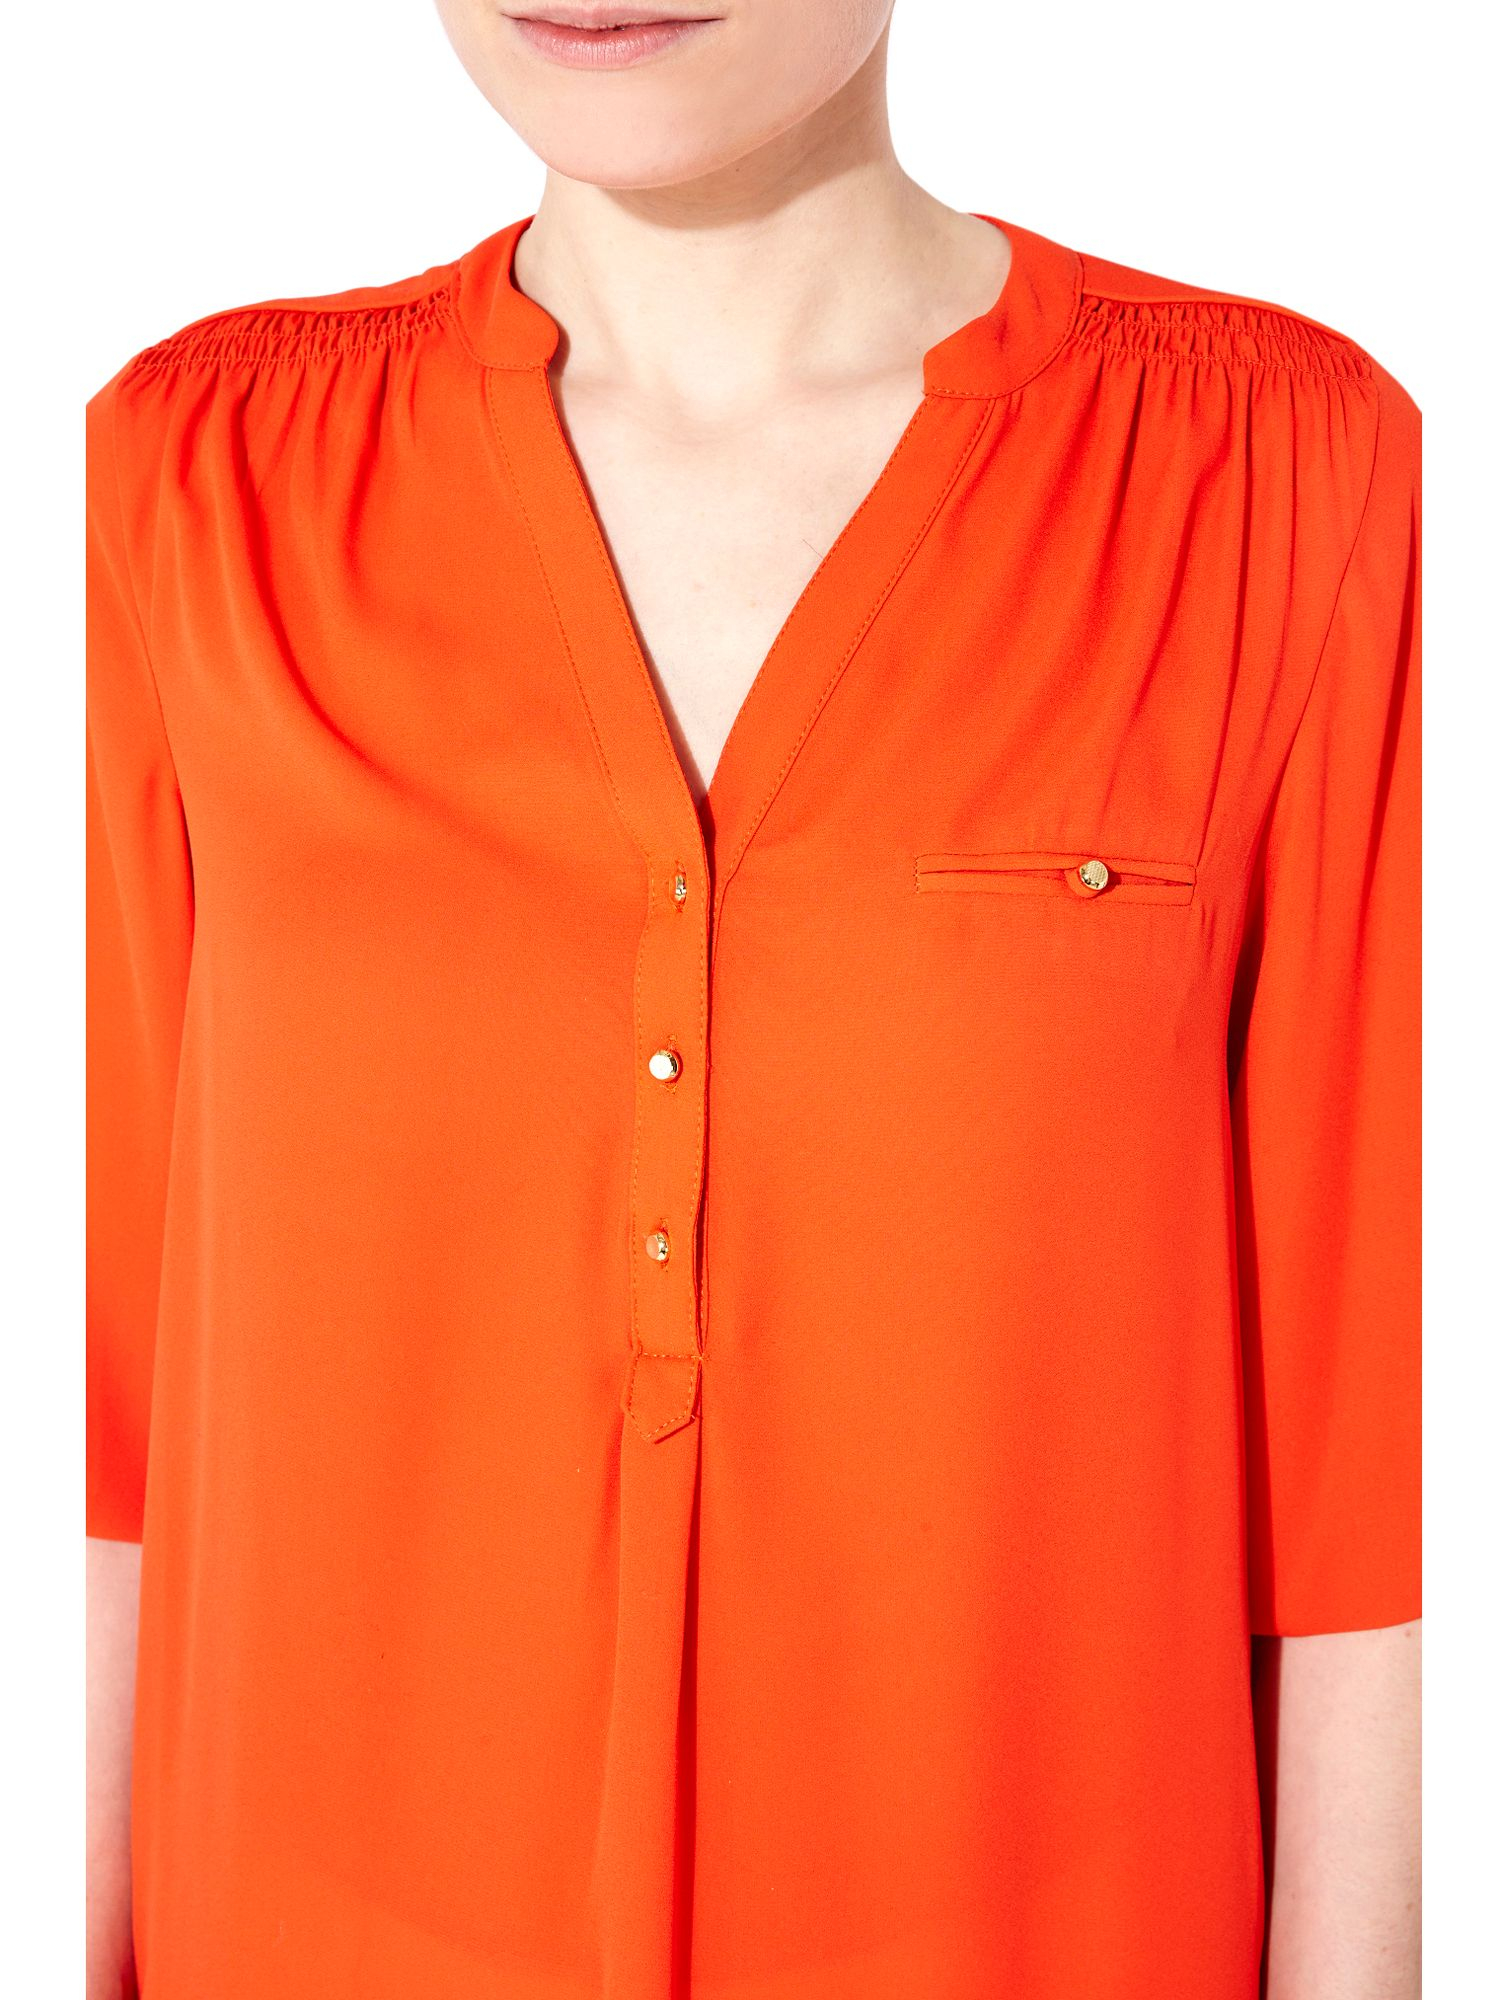 Wallis Orange Venus Shirt in Orange | Lyst